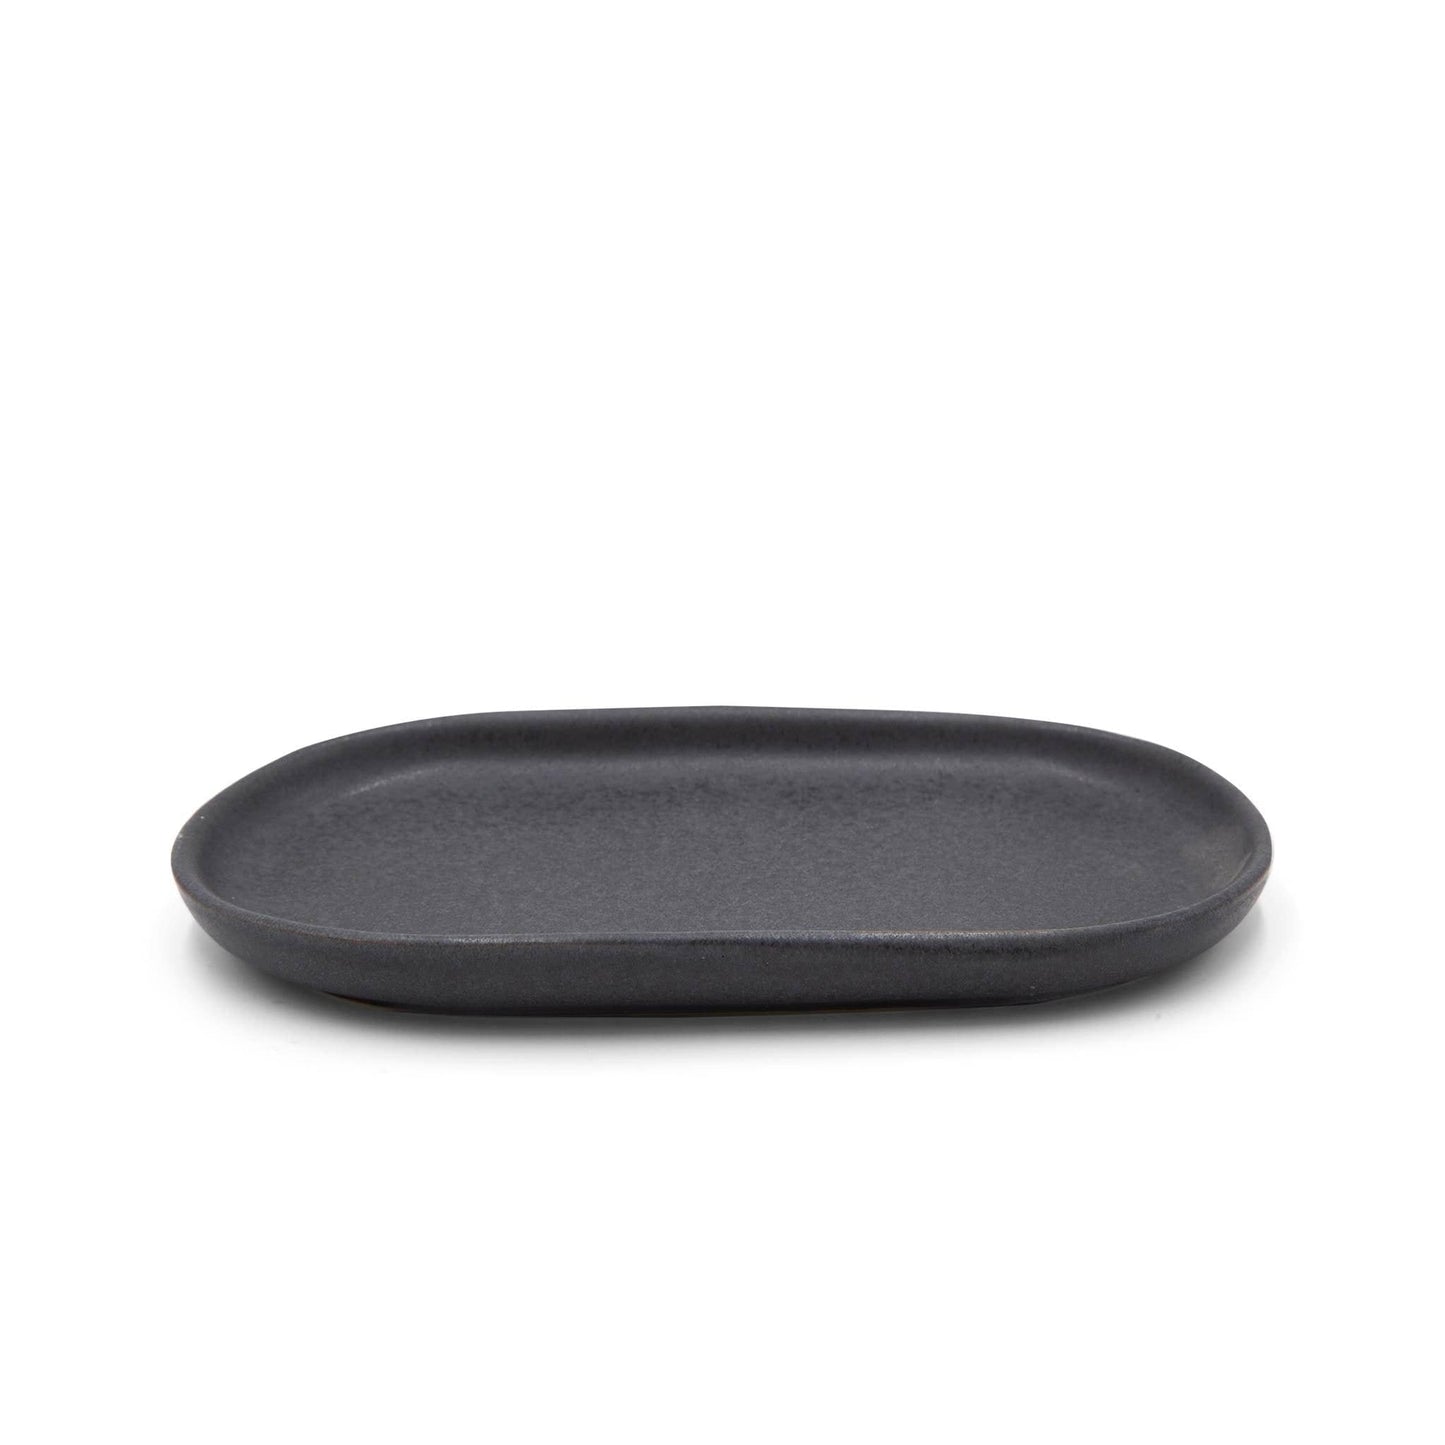 Faerly Plates Ceramic Slim Mini Tray